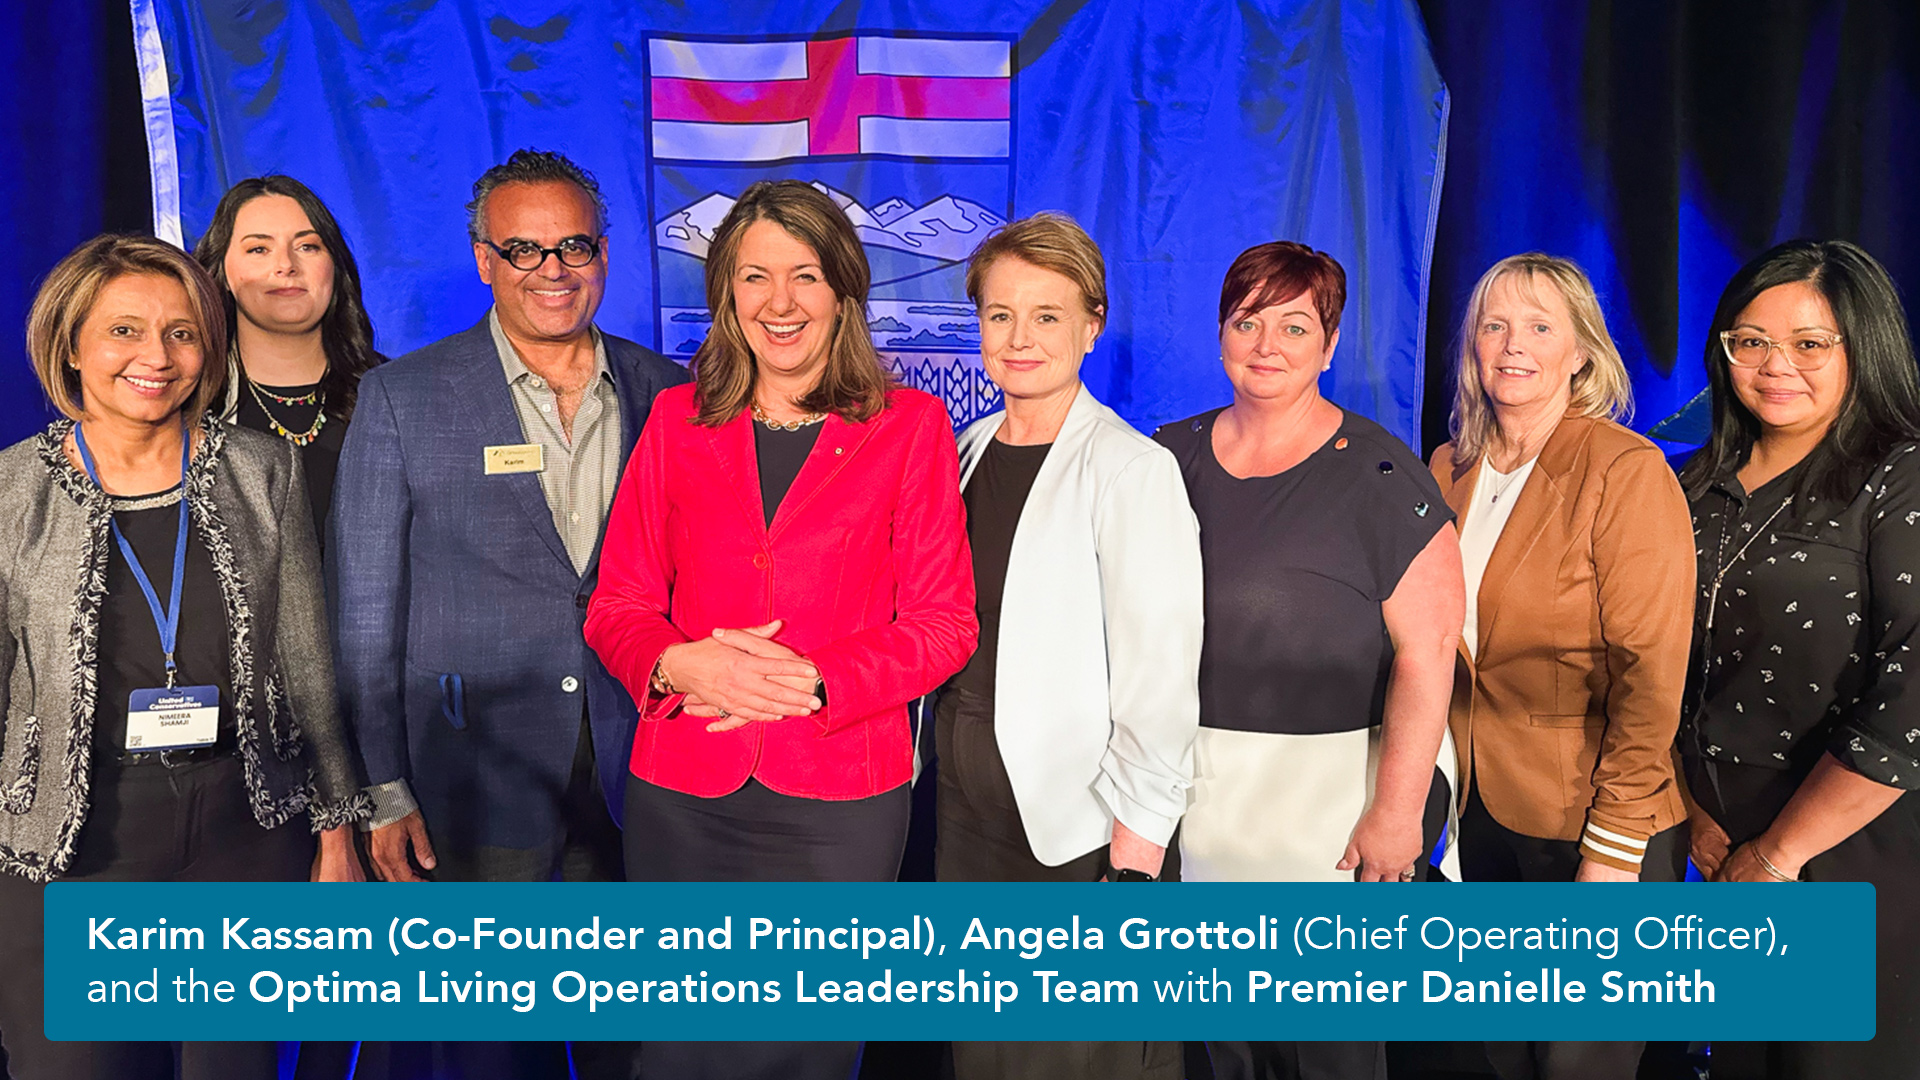 Karim Kassam with Premier Danielle Smith and the Alberta Leadership Team